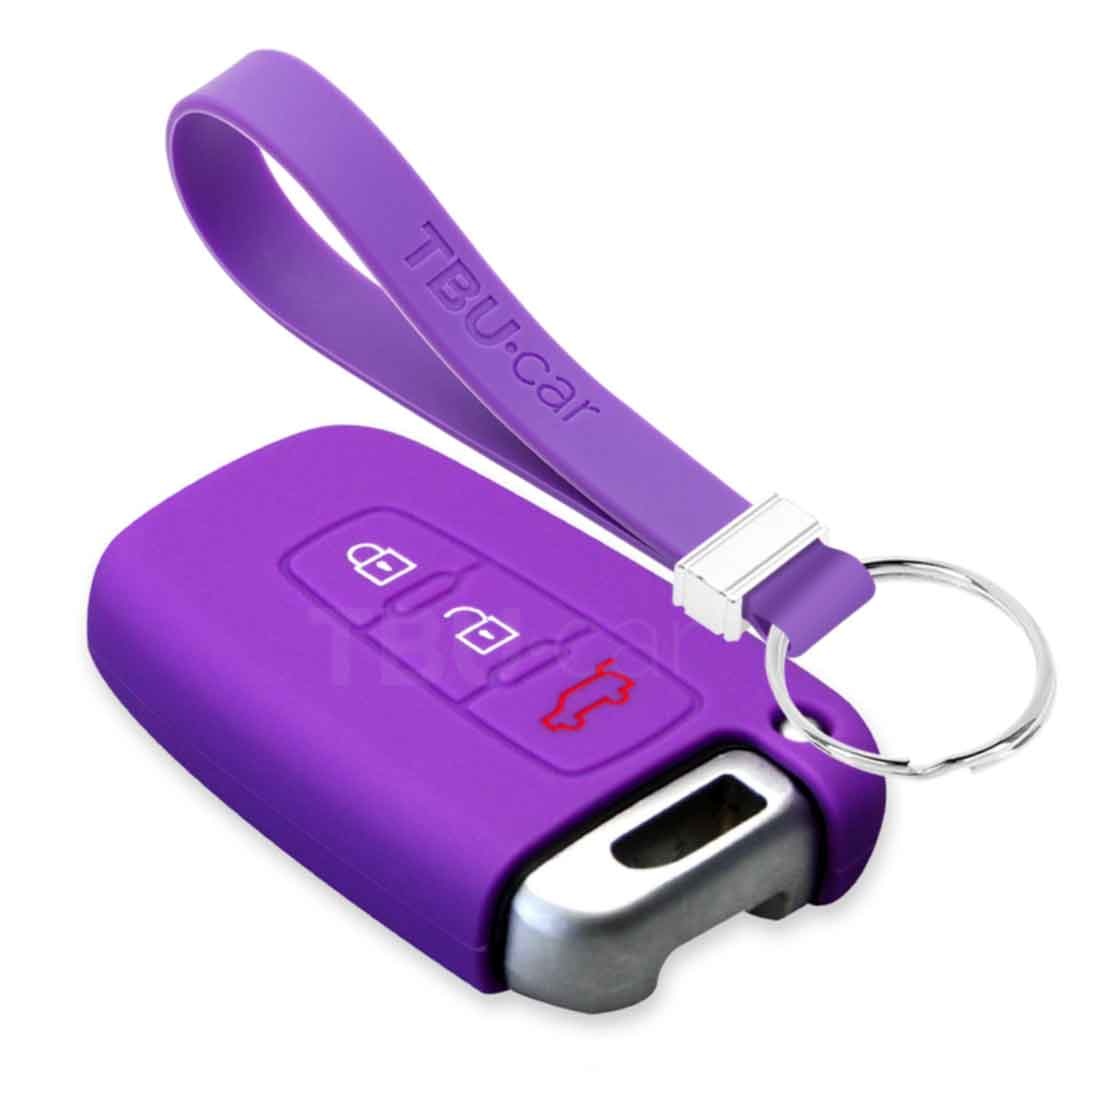 TBU car TBU car Autoschlüssel Hülle kompatibel mit Kia 3 Tasten (Keyless Entry) - Schutzhülle aus Silikon - Auto Schlüsselhülle Cover in Violett